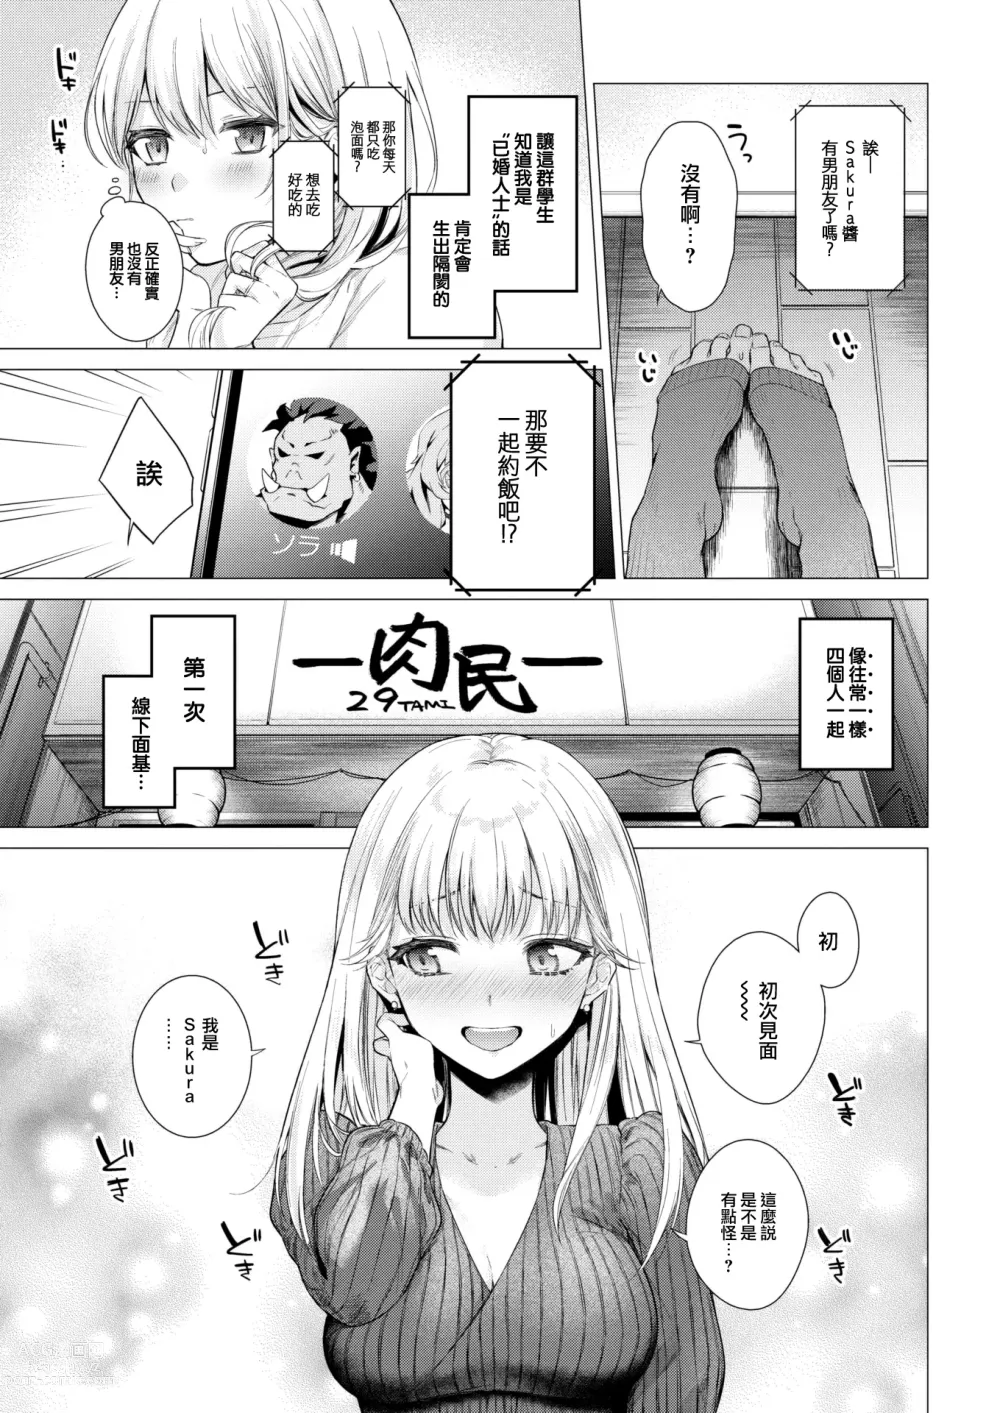 Page 6 of manga Zurukute Gomenne